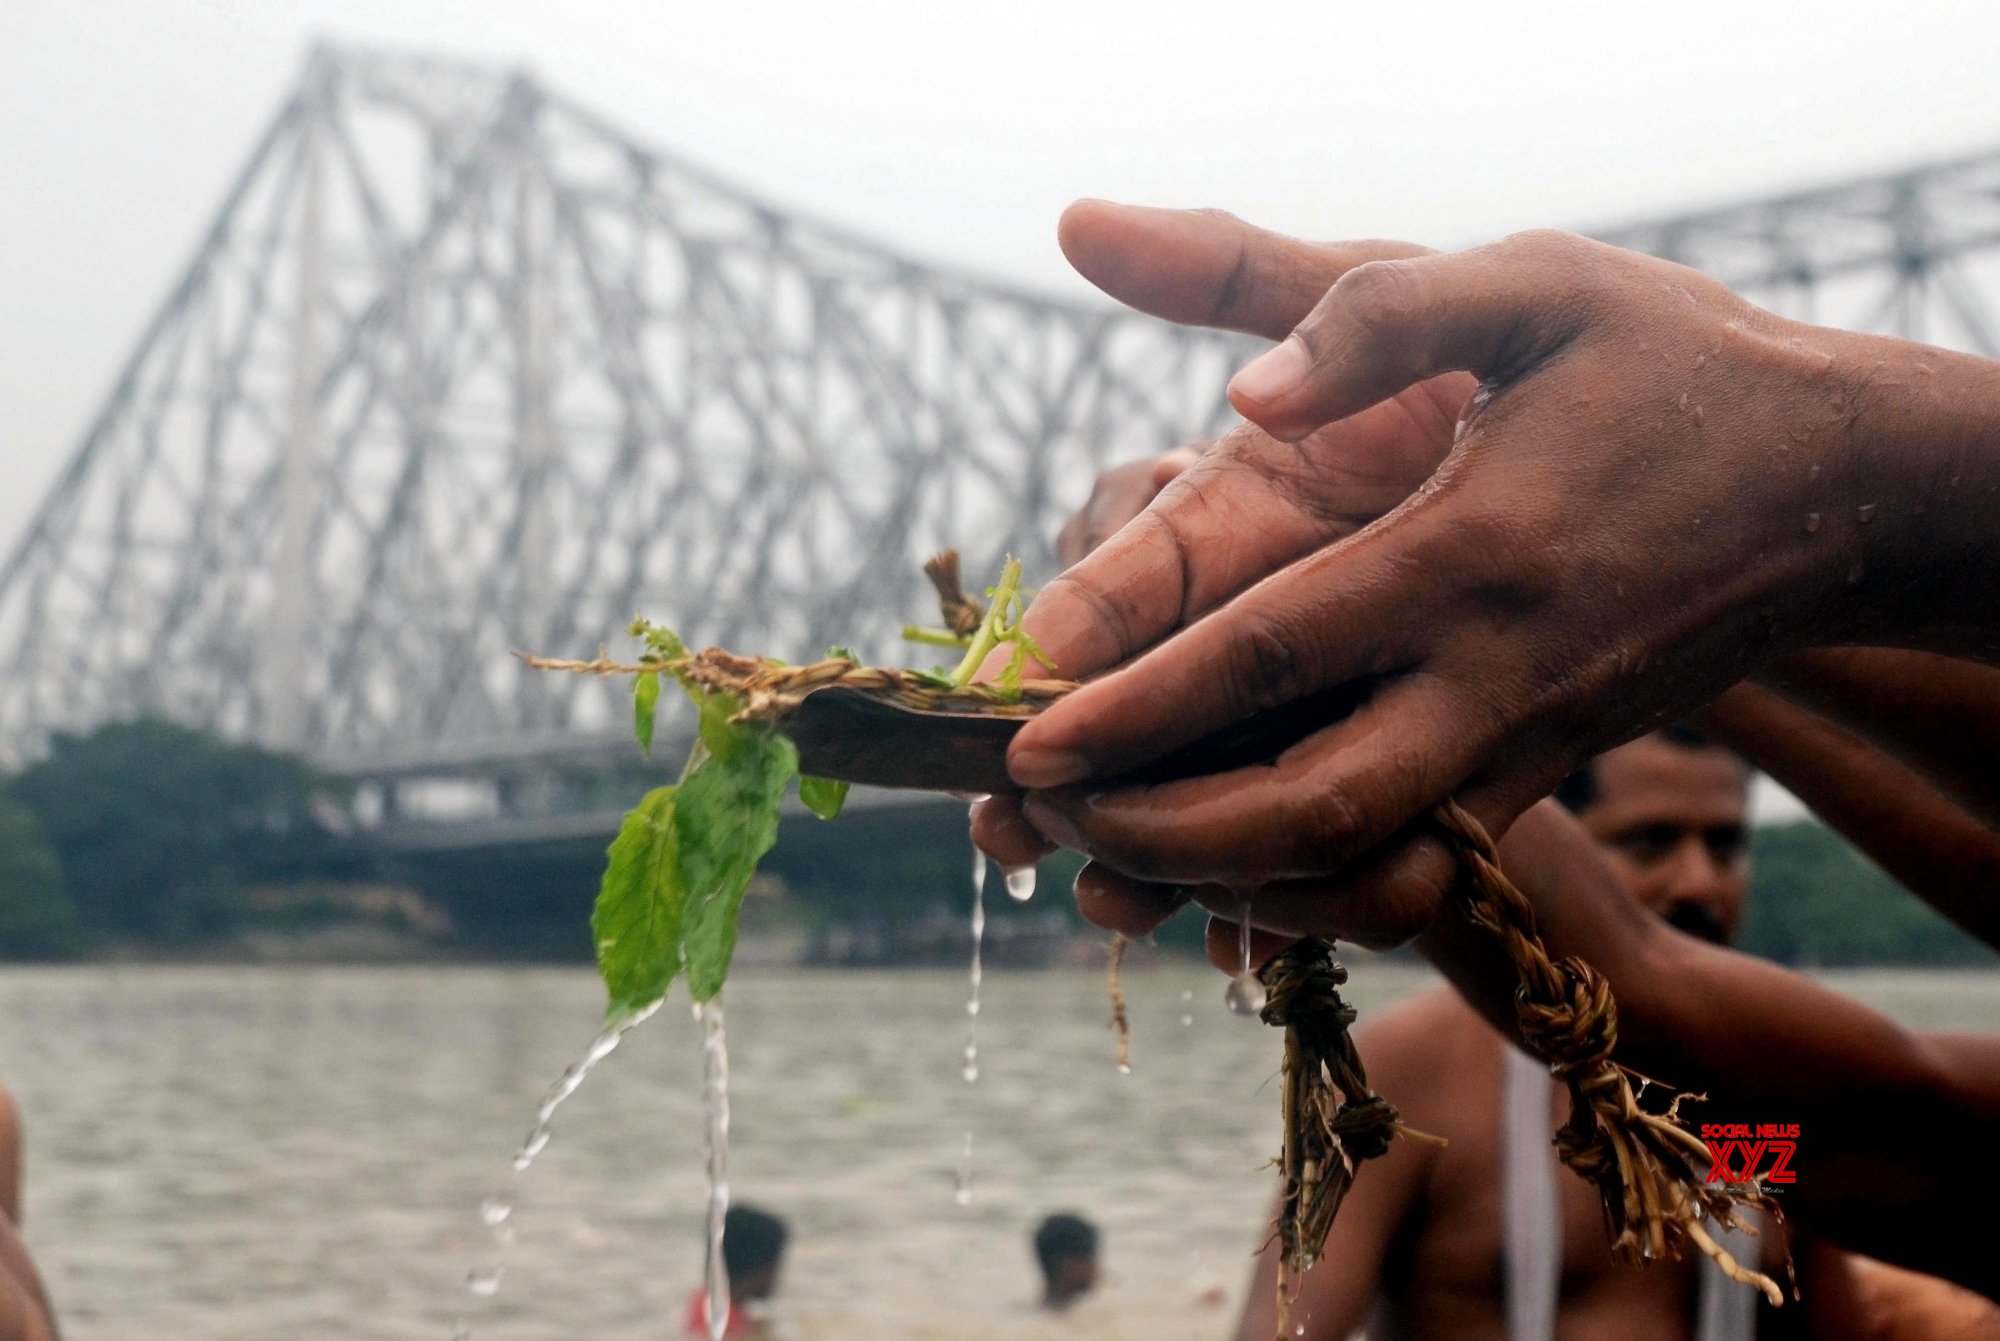 Before the glorious festivities for Durga Puja, thousands gather in Kolkata to perform Mahalaya rituals. - Asiana Times